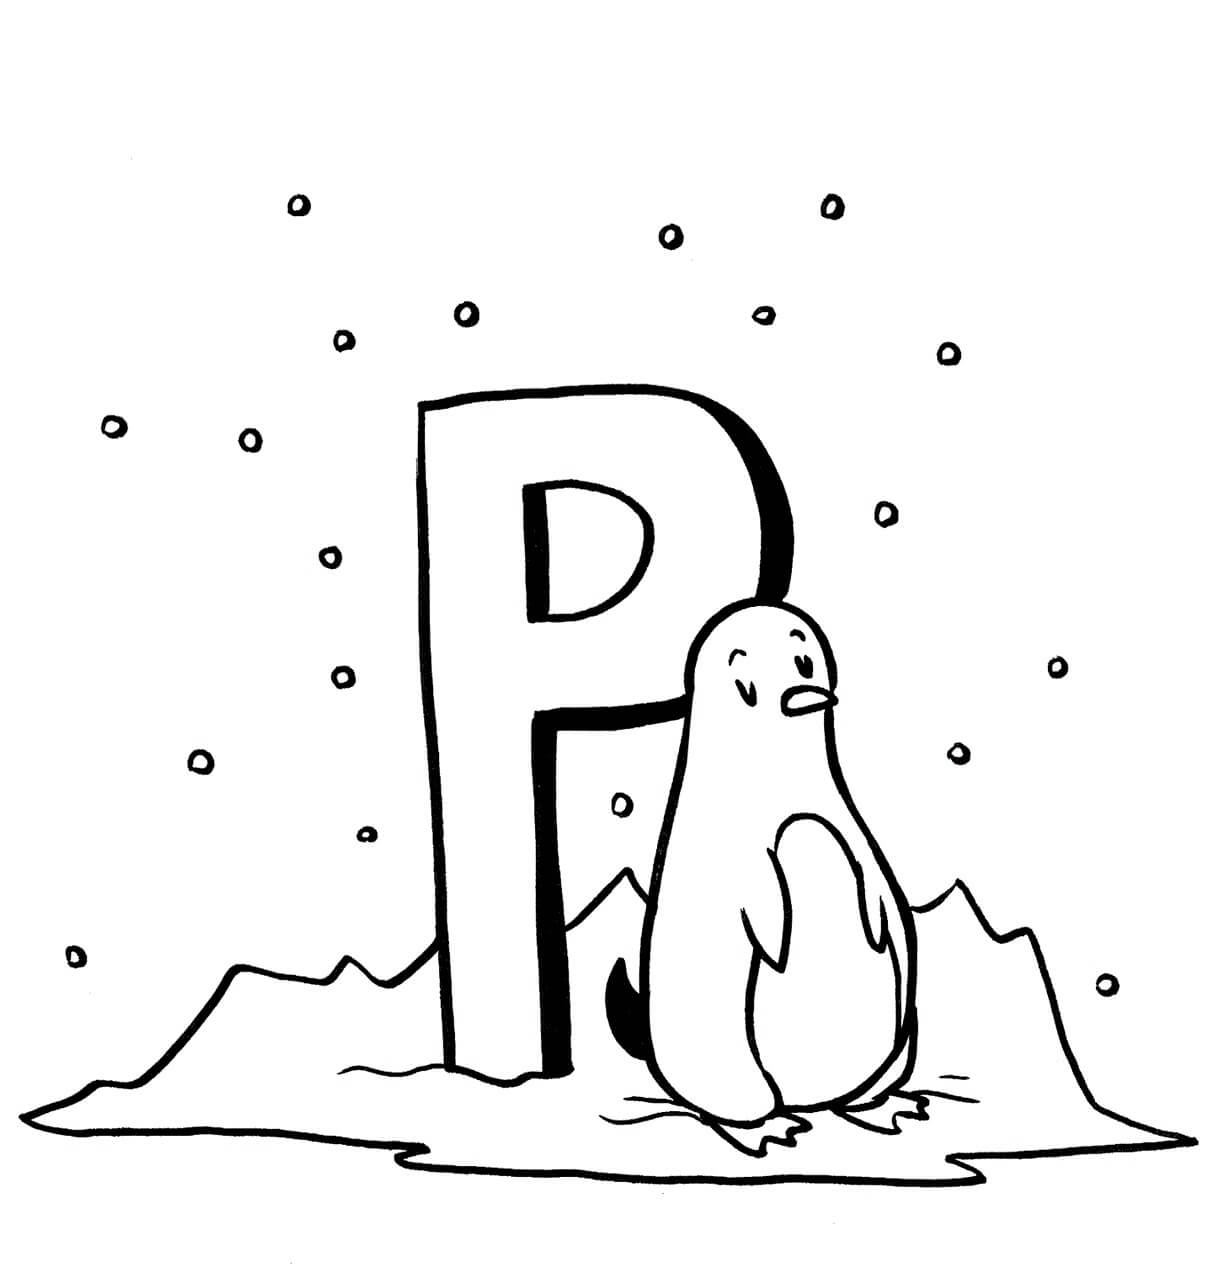 Pinguino con Letra P